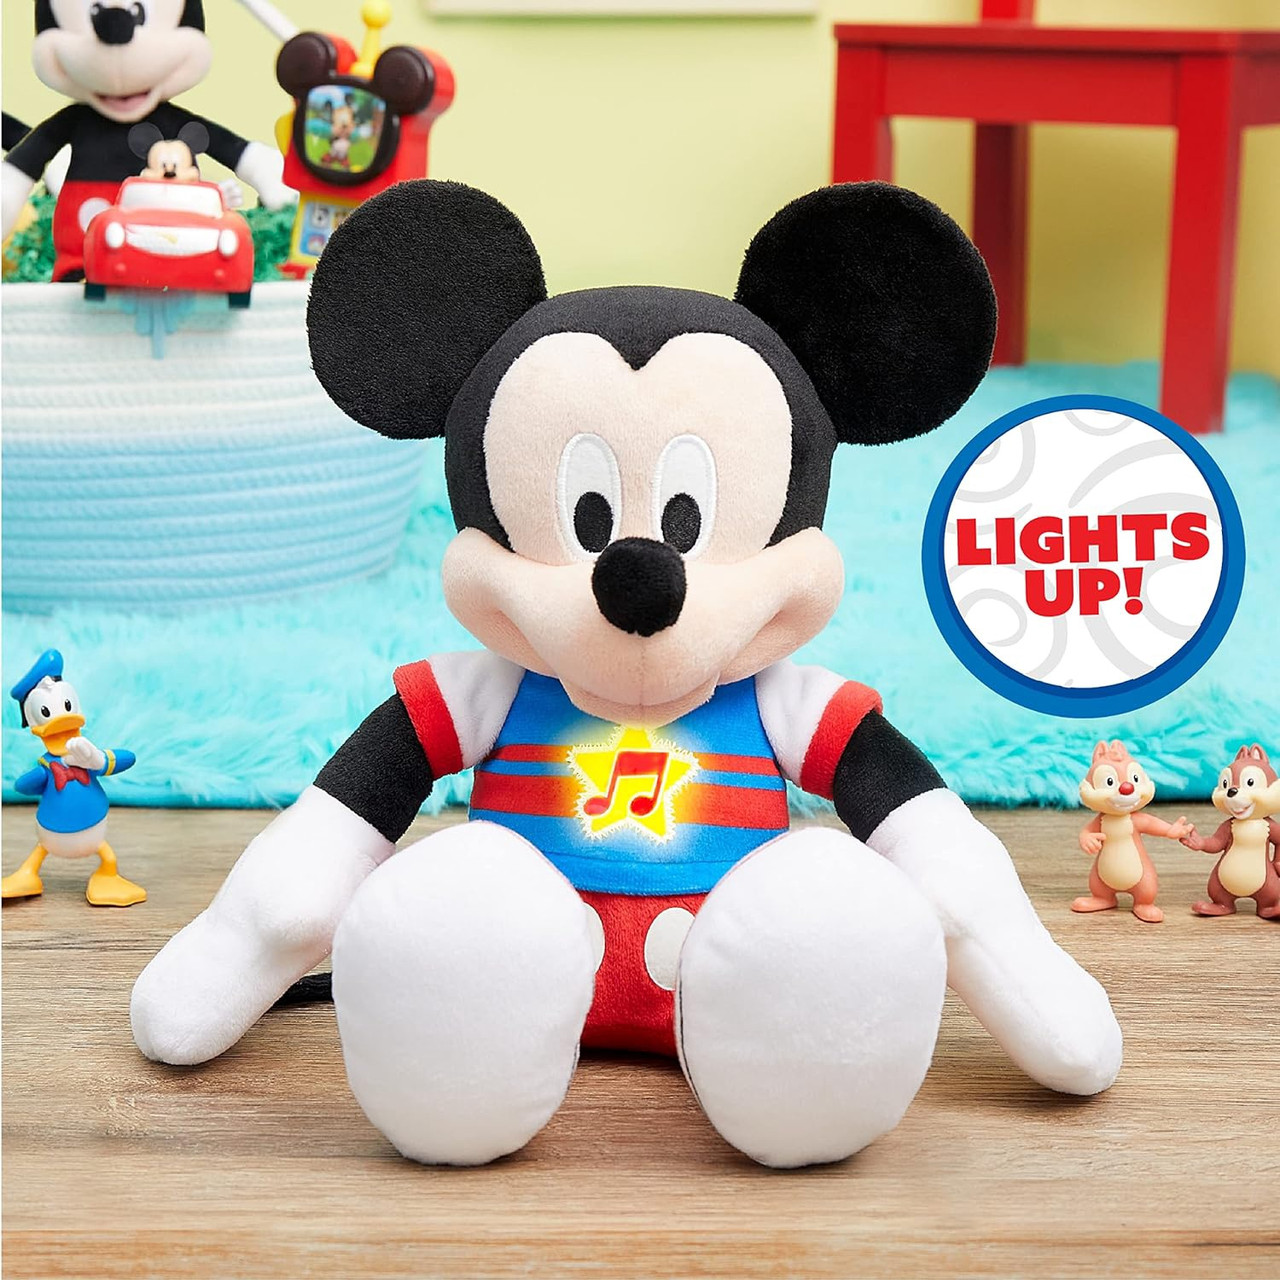  VTech Disney Junior Mickey Mouse Funhouse Explore and